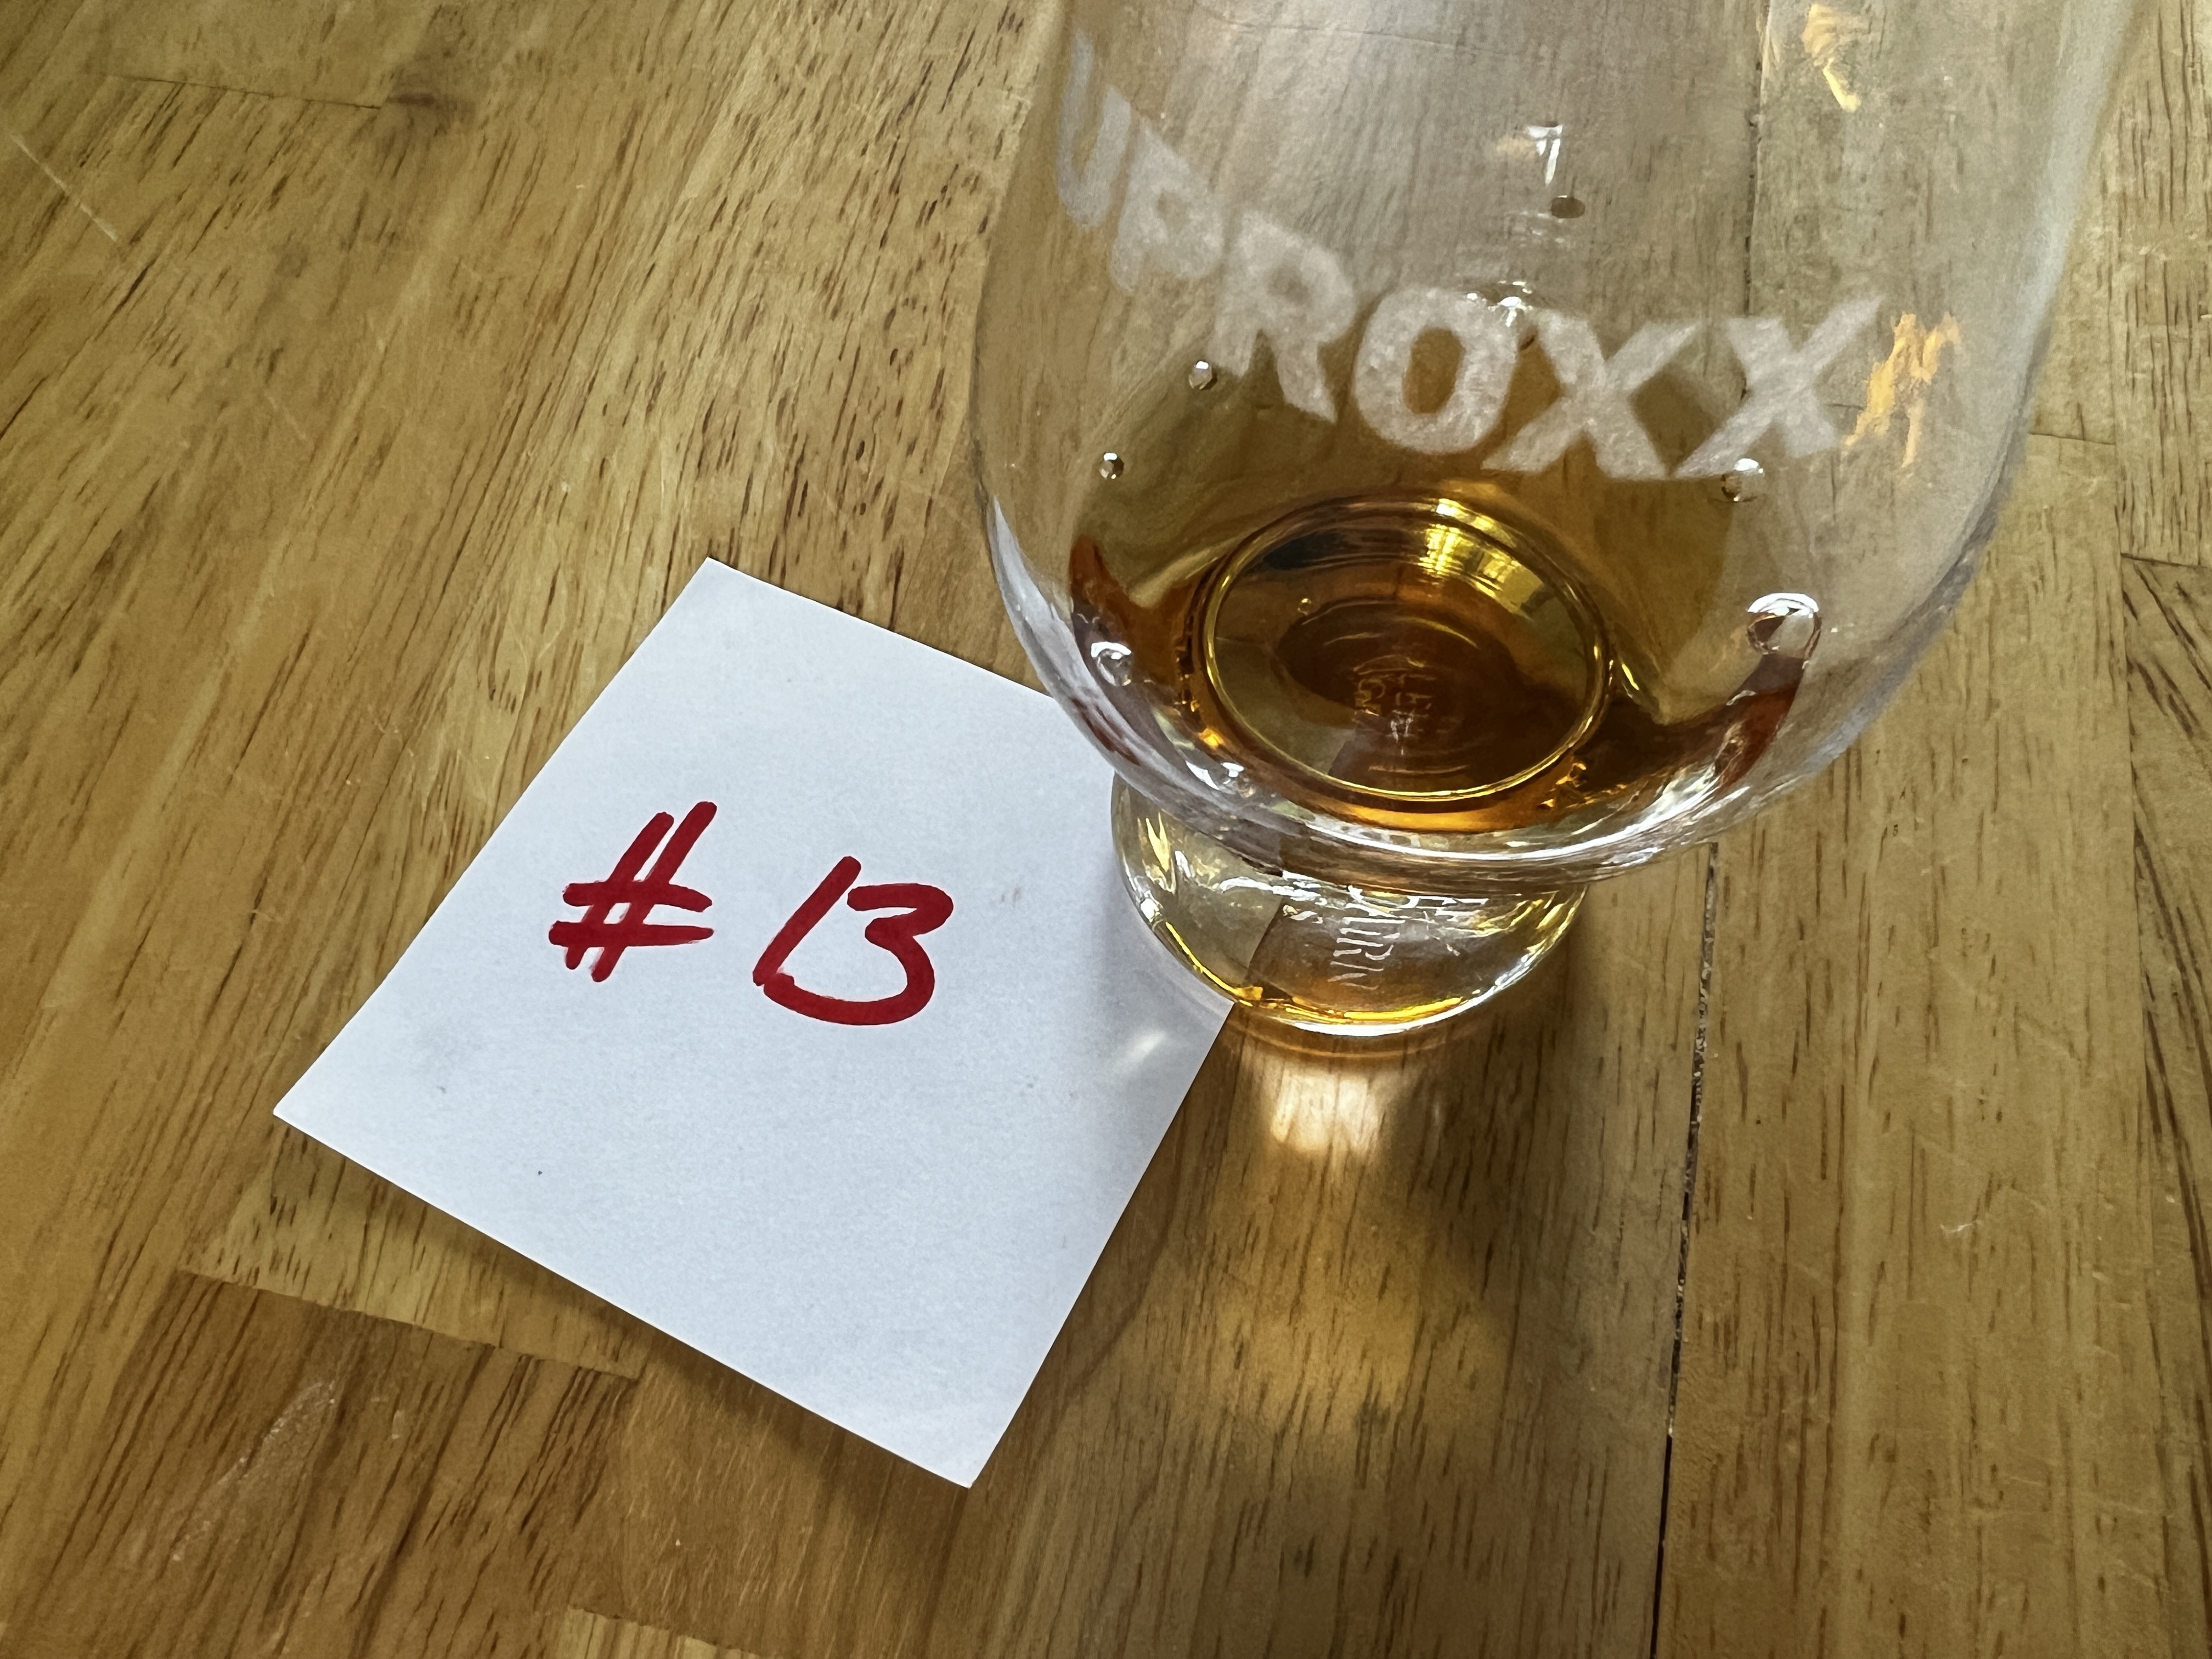 Bourbon vs. Rye Whiskey Battle